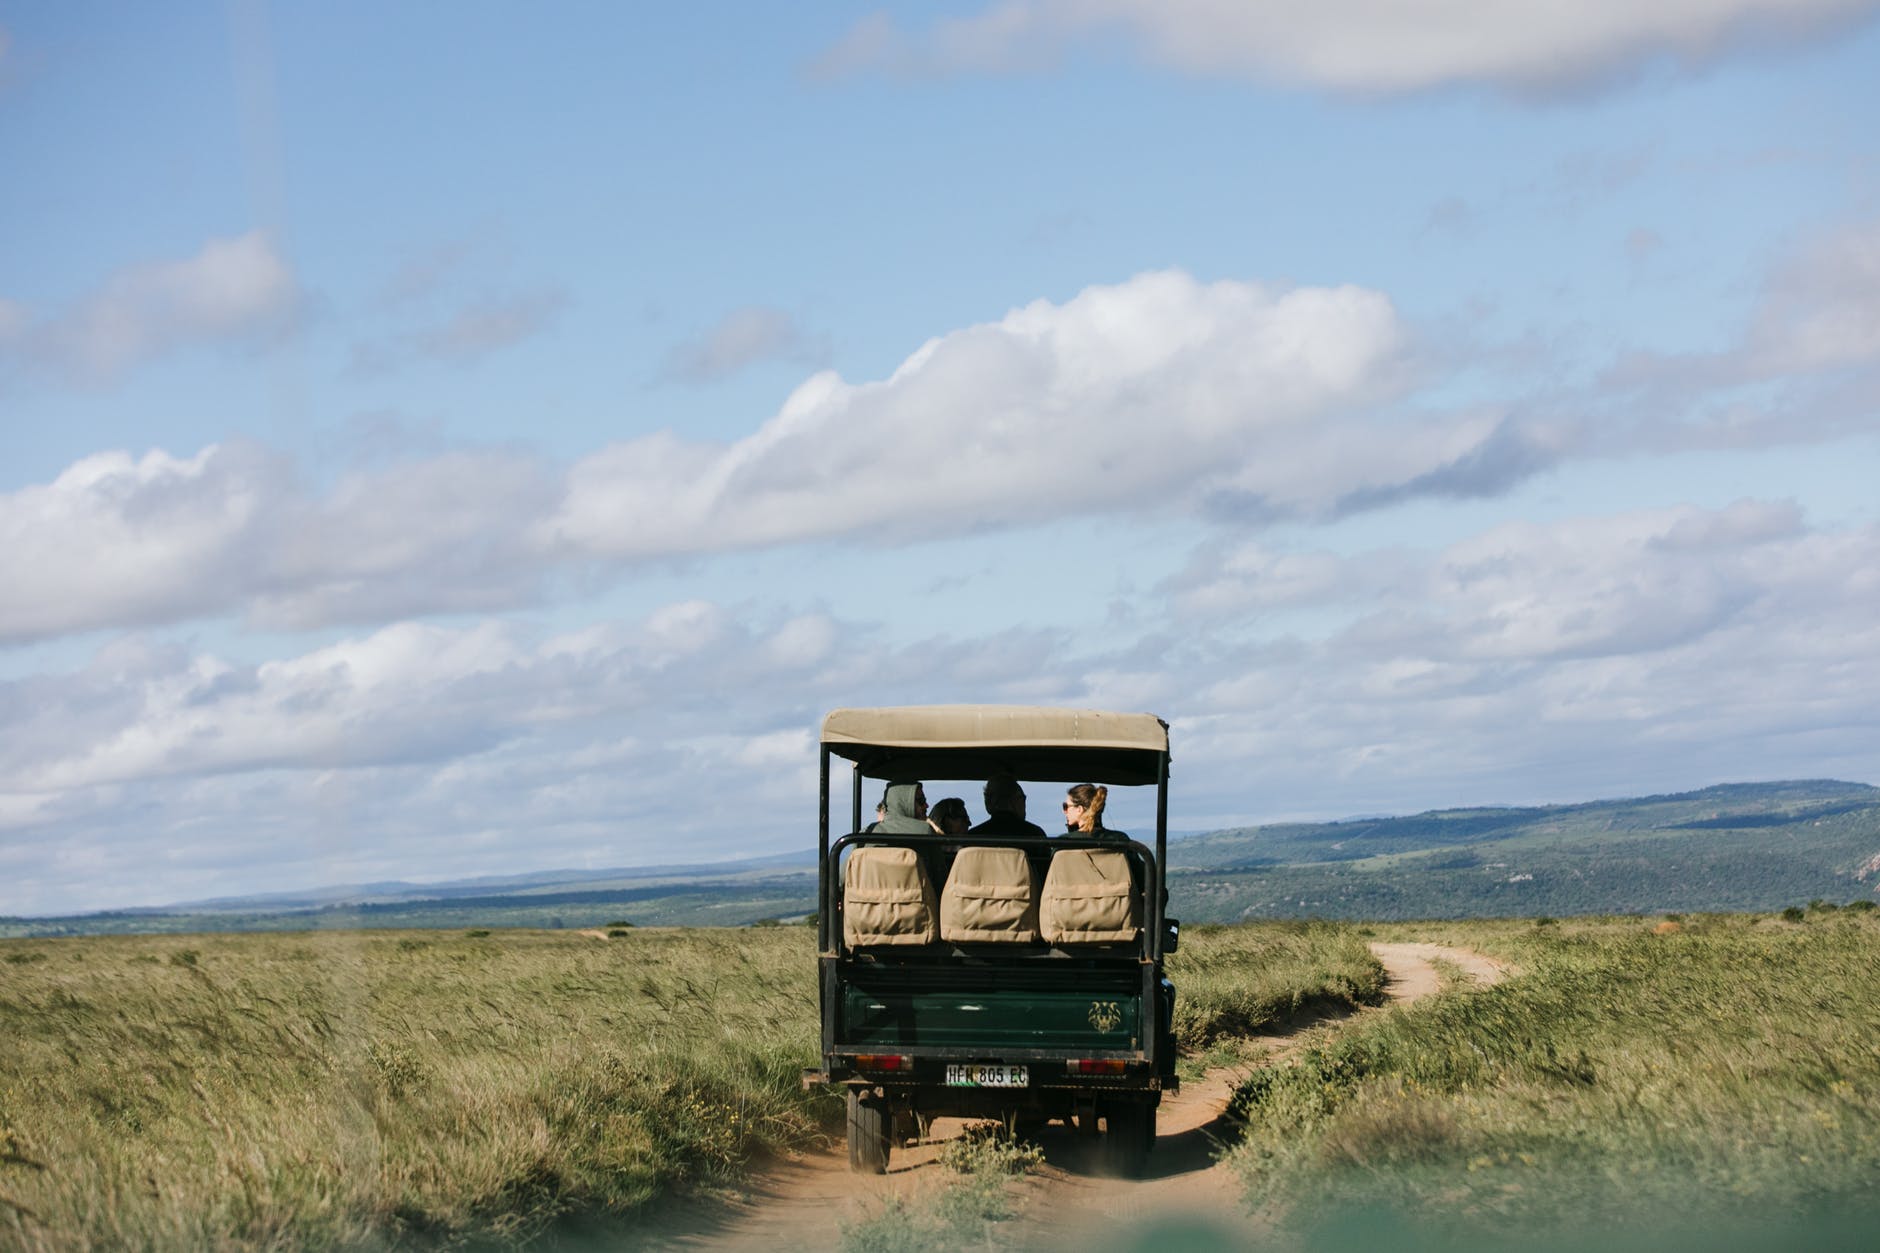 on a safari vehicle in Africa